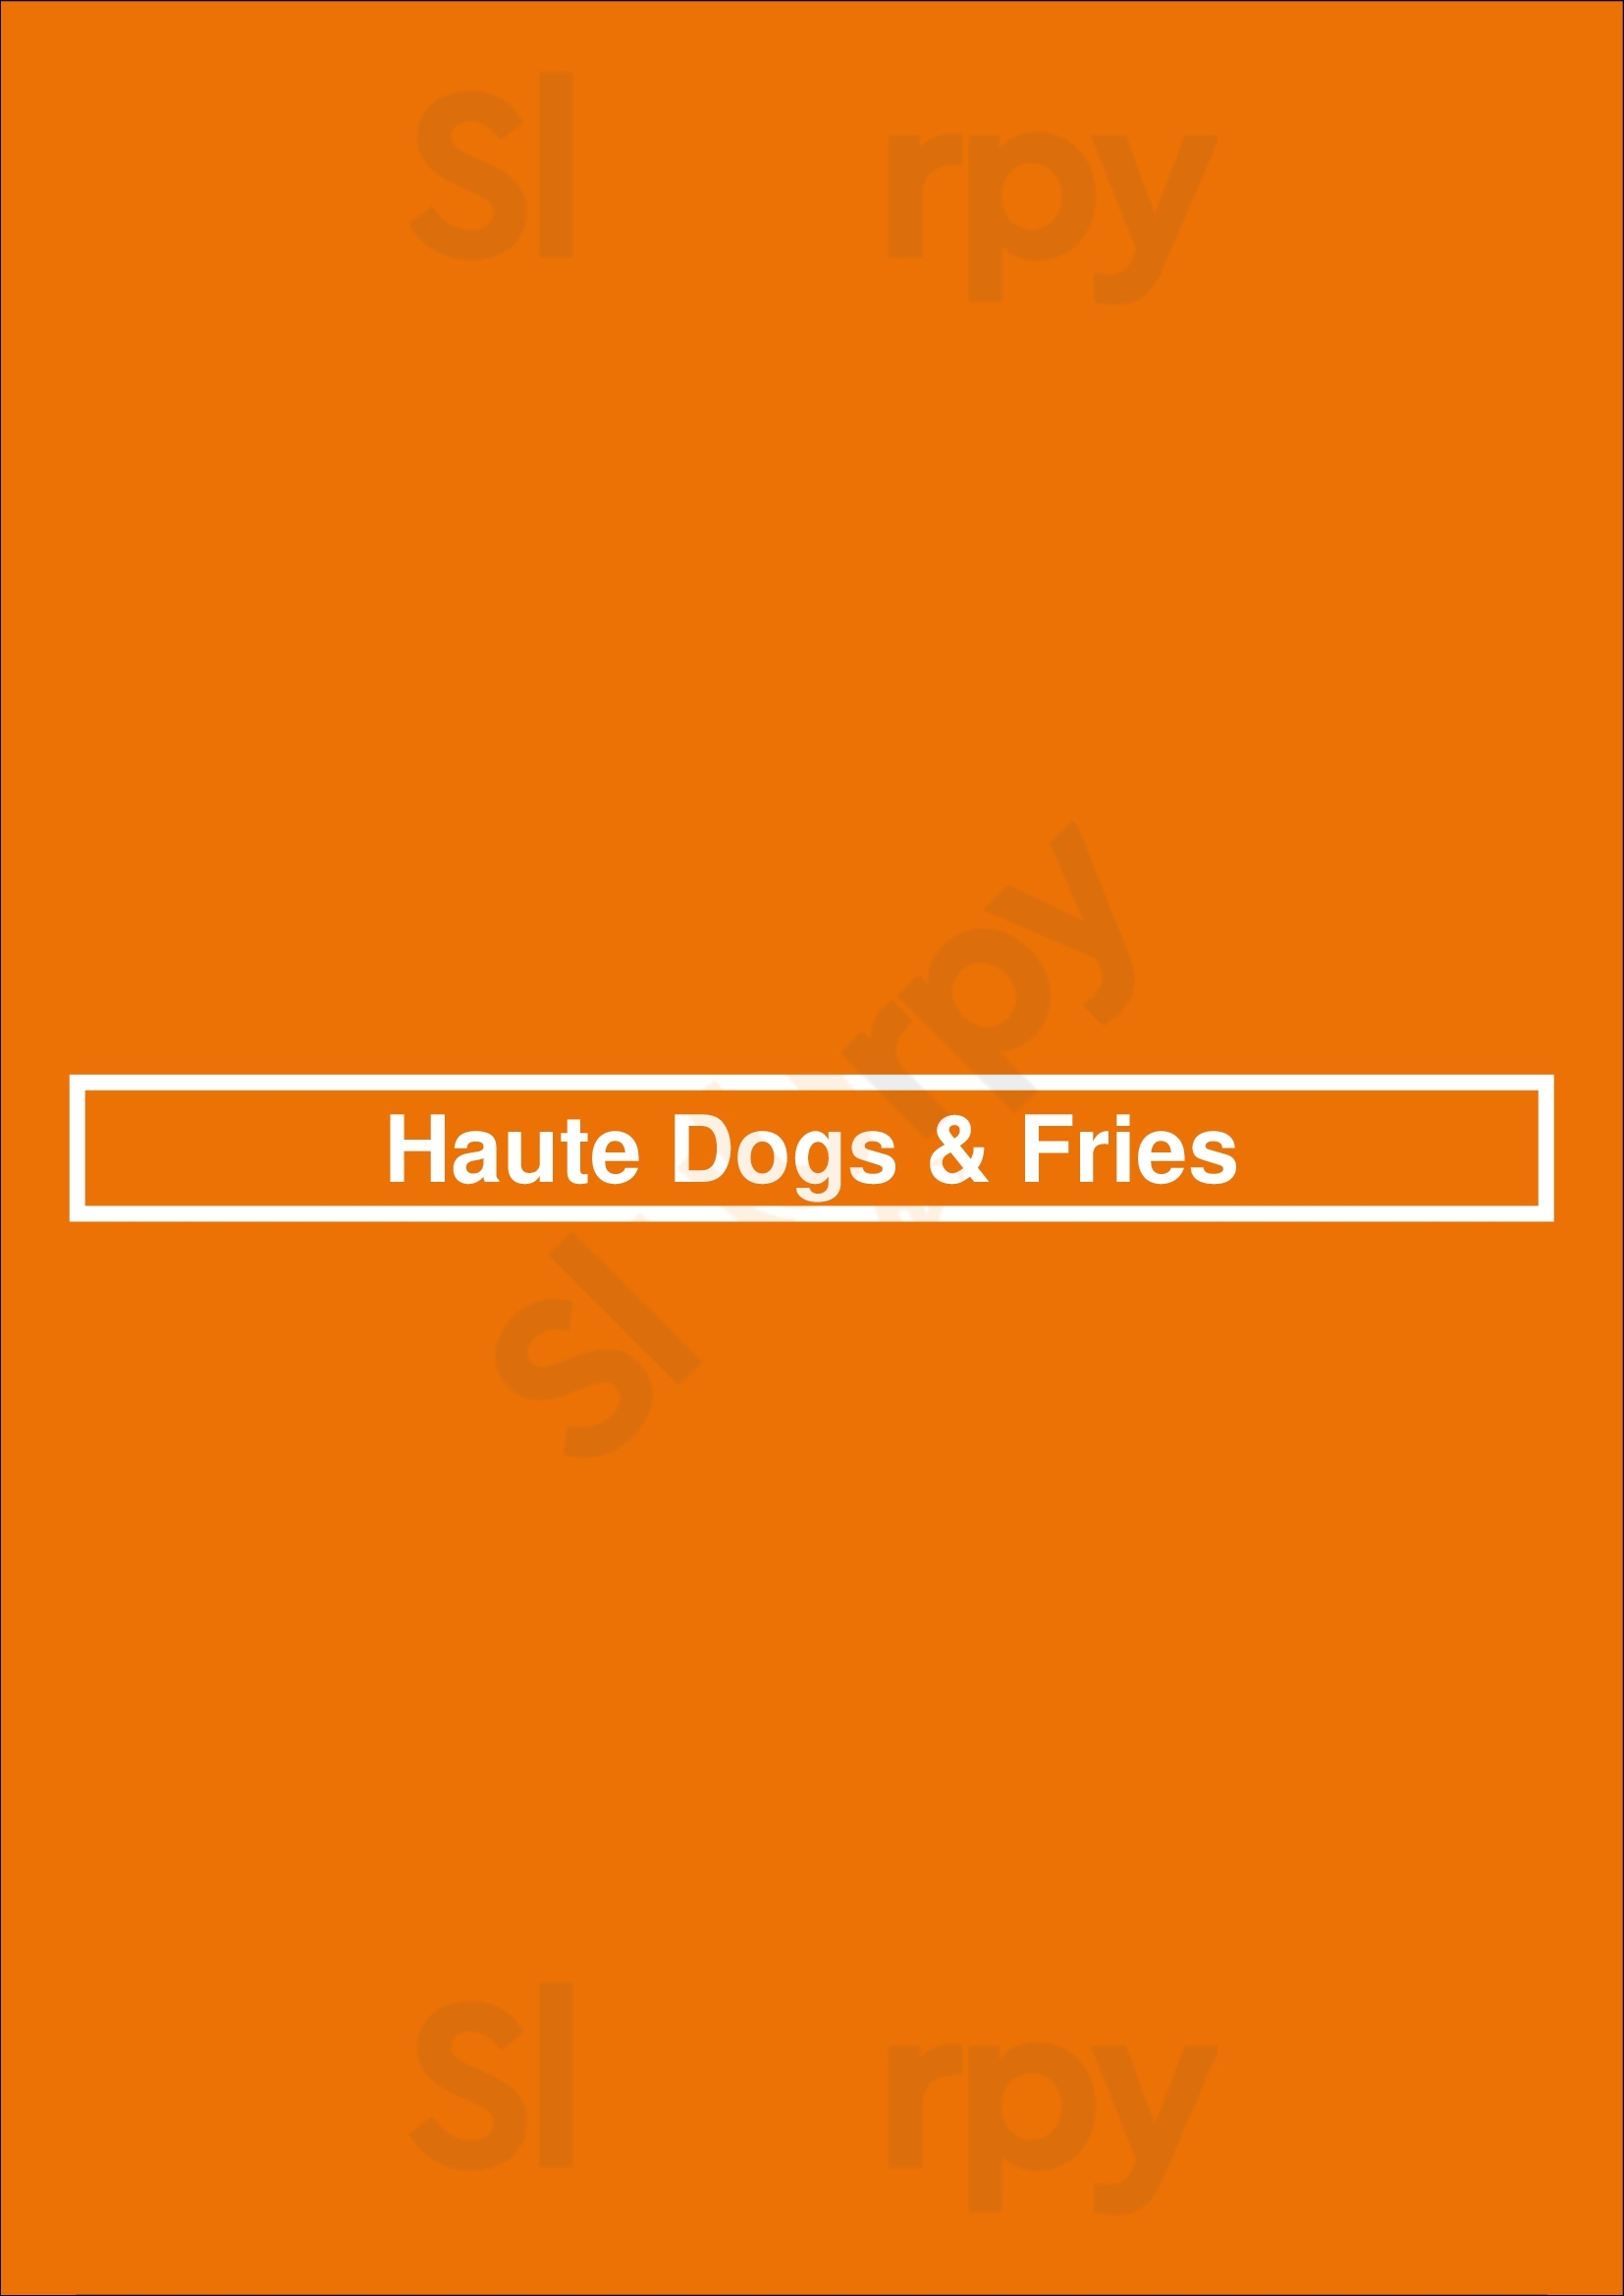 Haute Dogs & Fries Alexandria Menu - 1